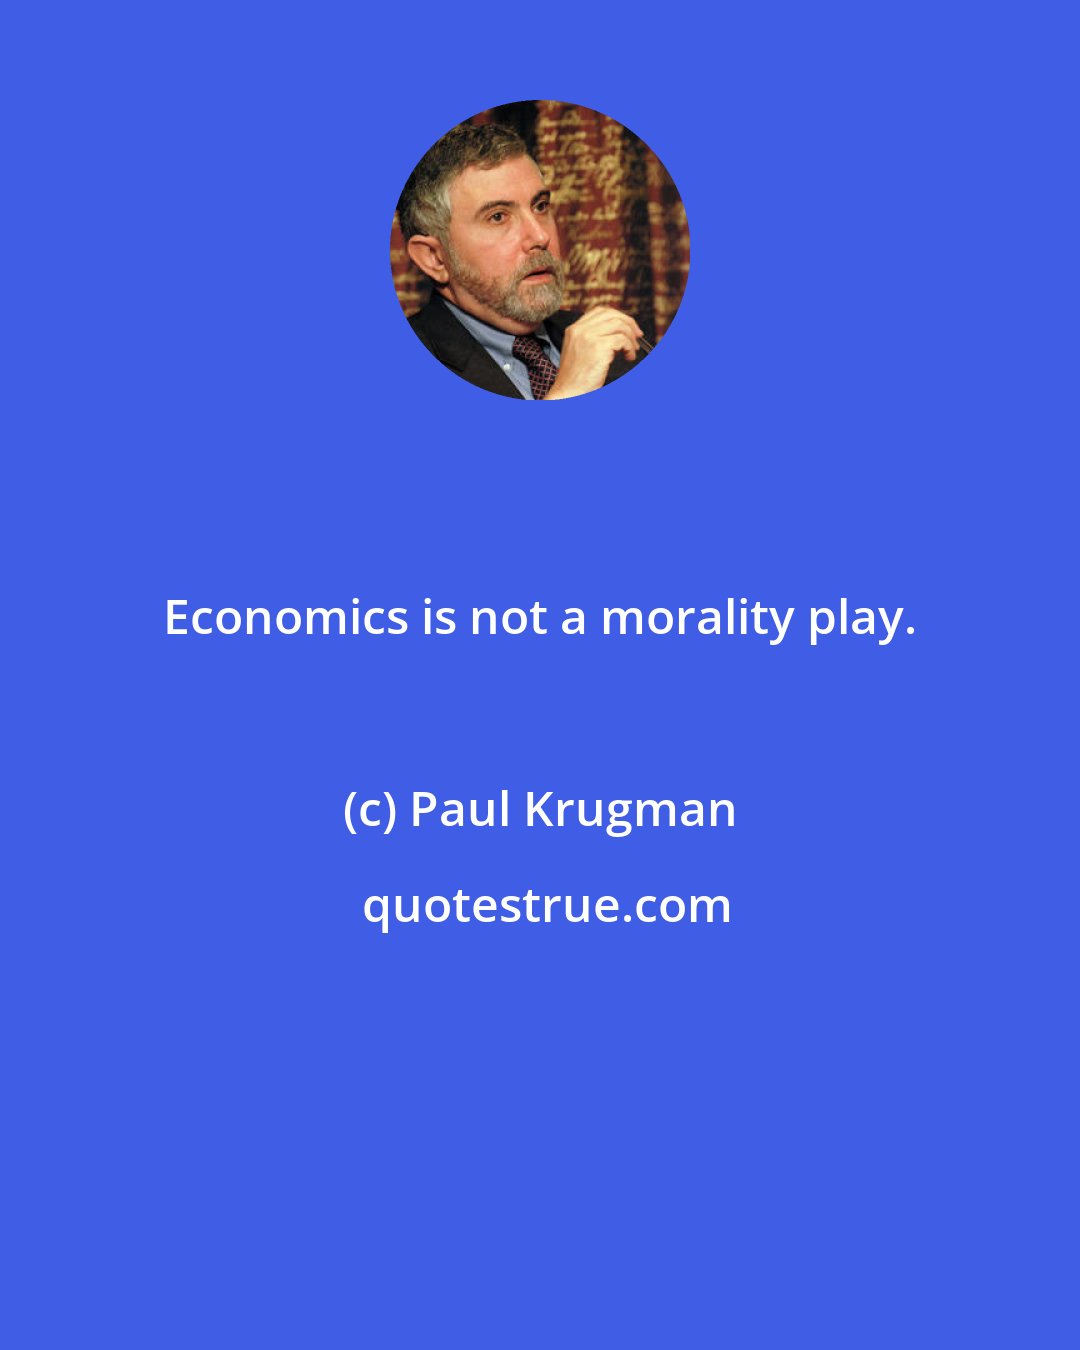 Paul Krugman: Economics is not a morality play.